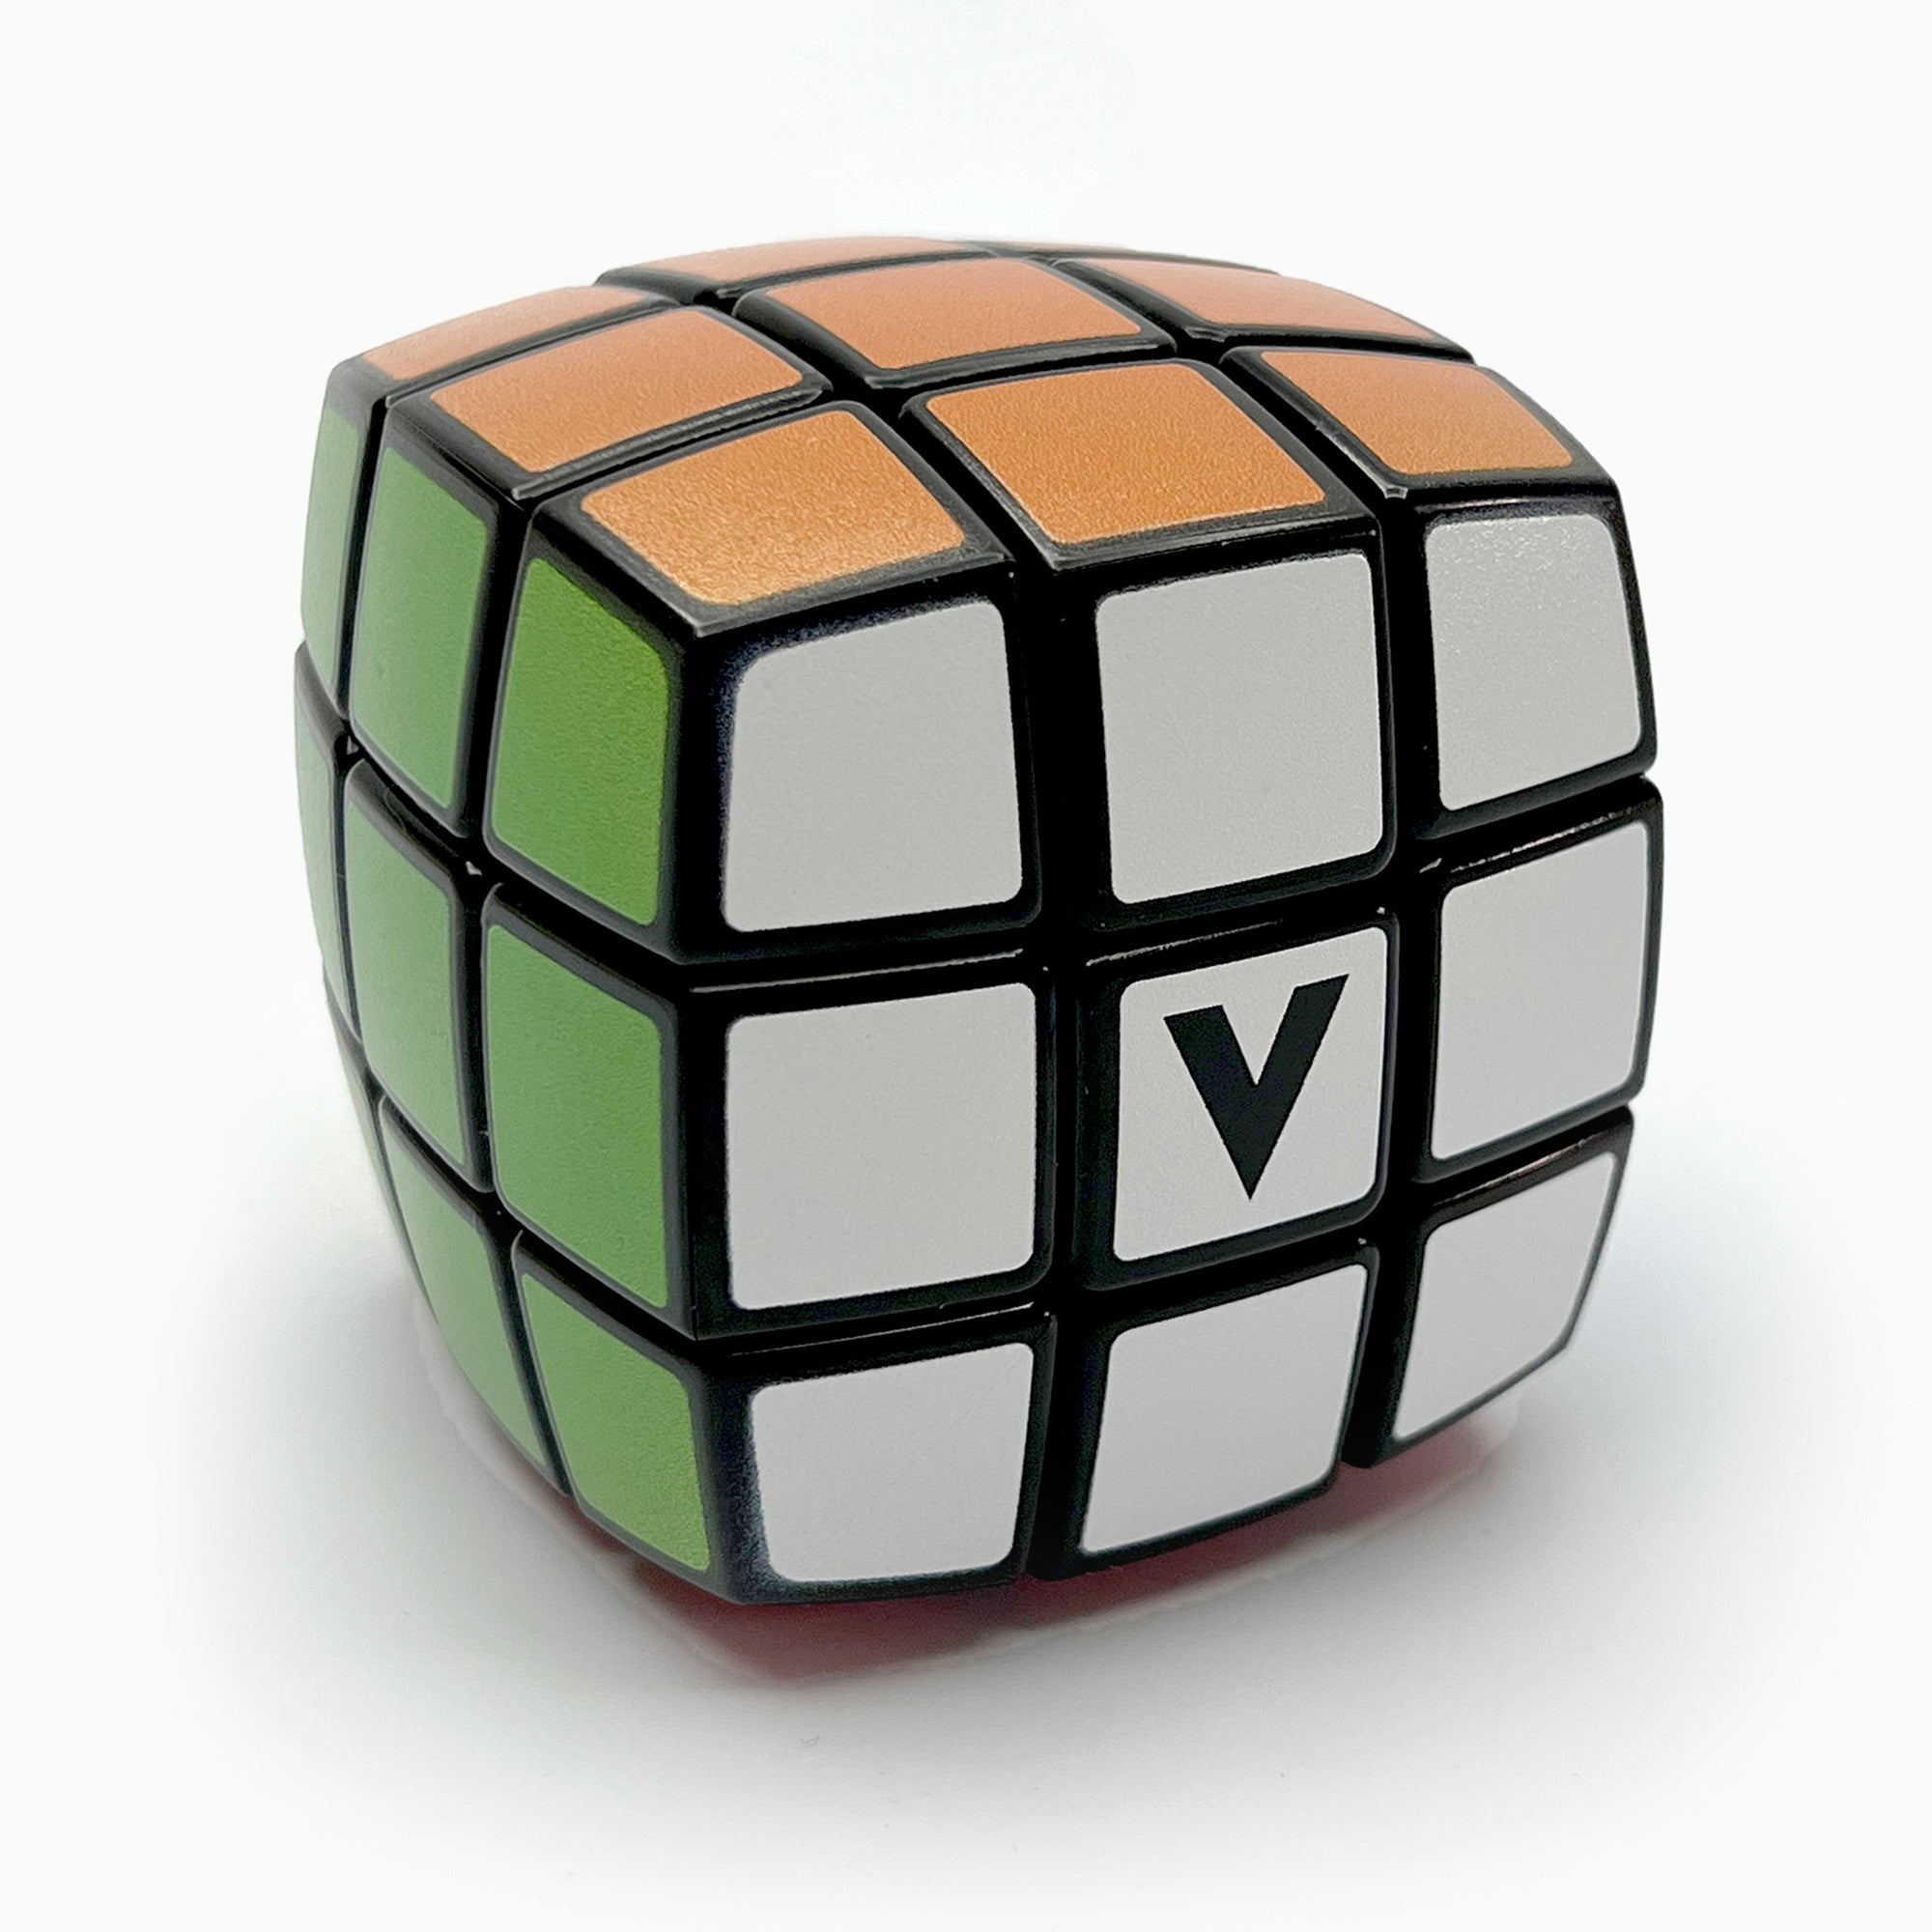 V-Cube 3x3x3 - Pillow